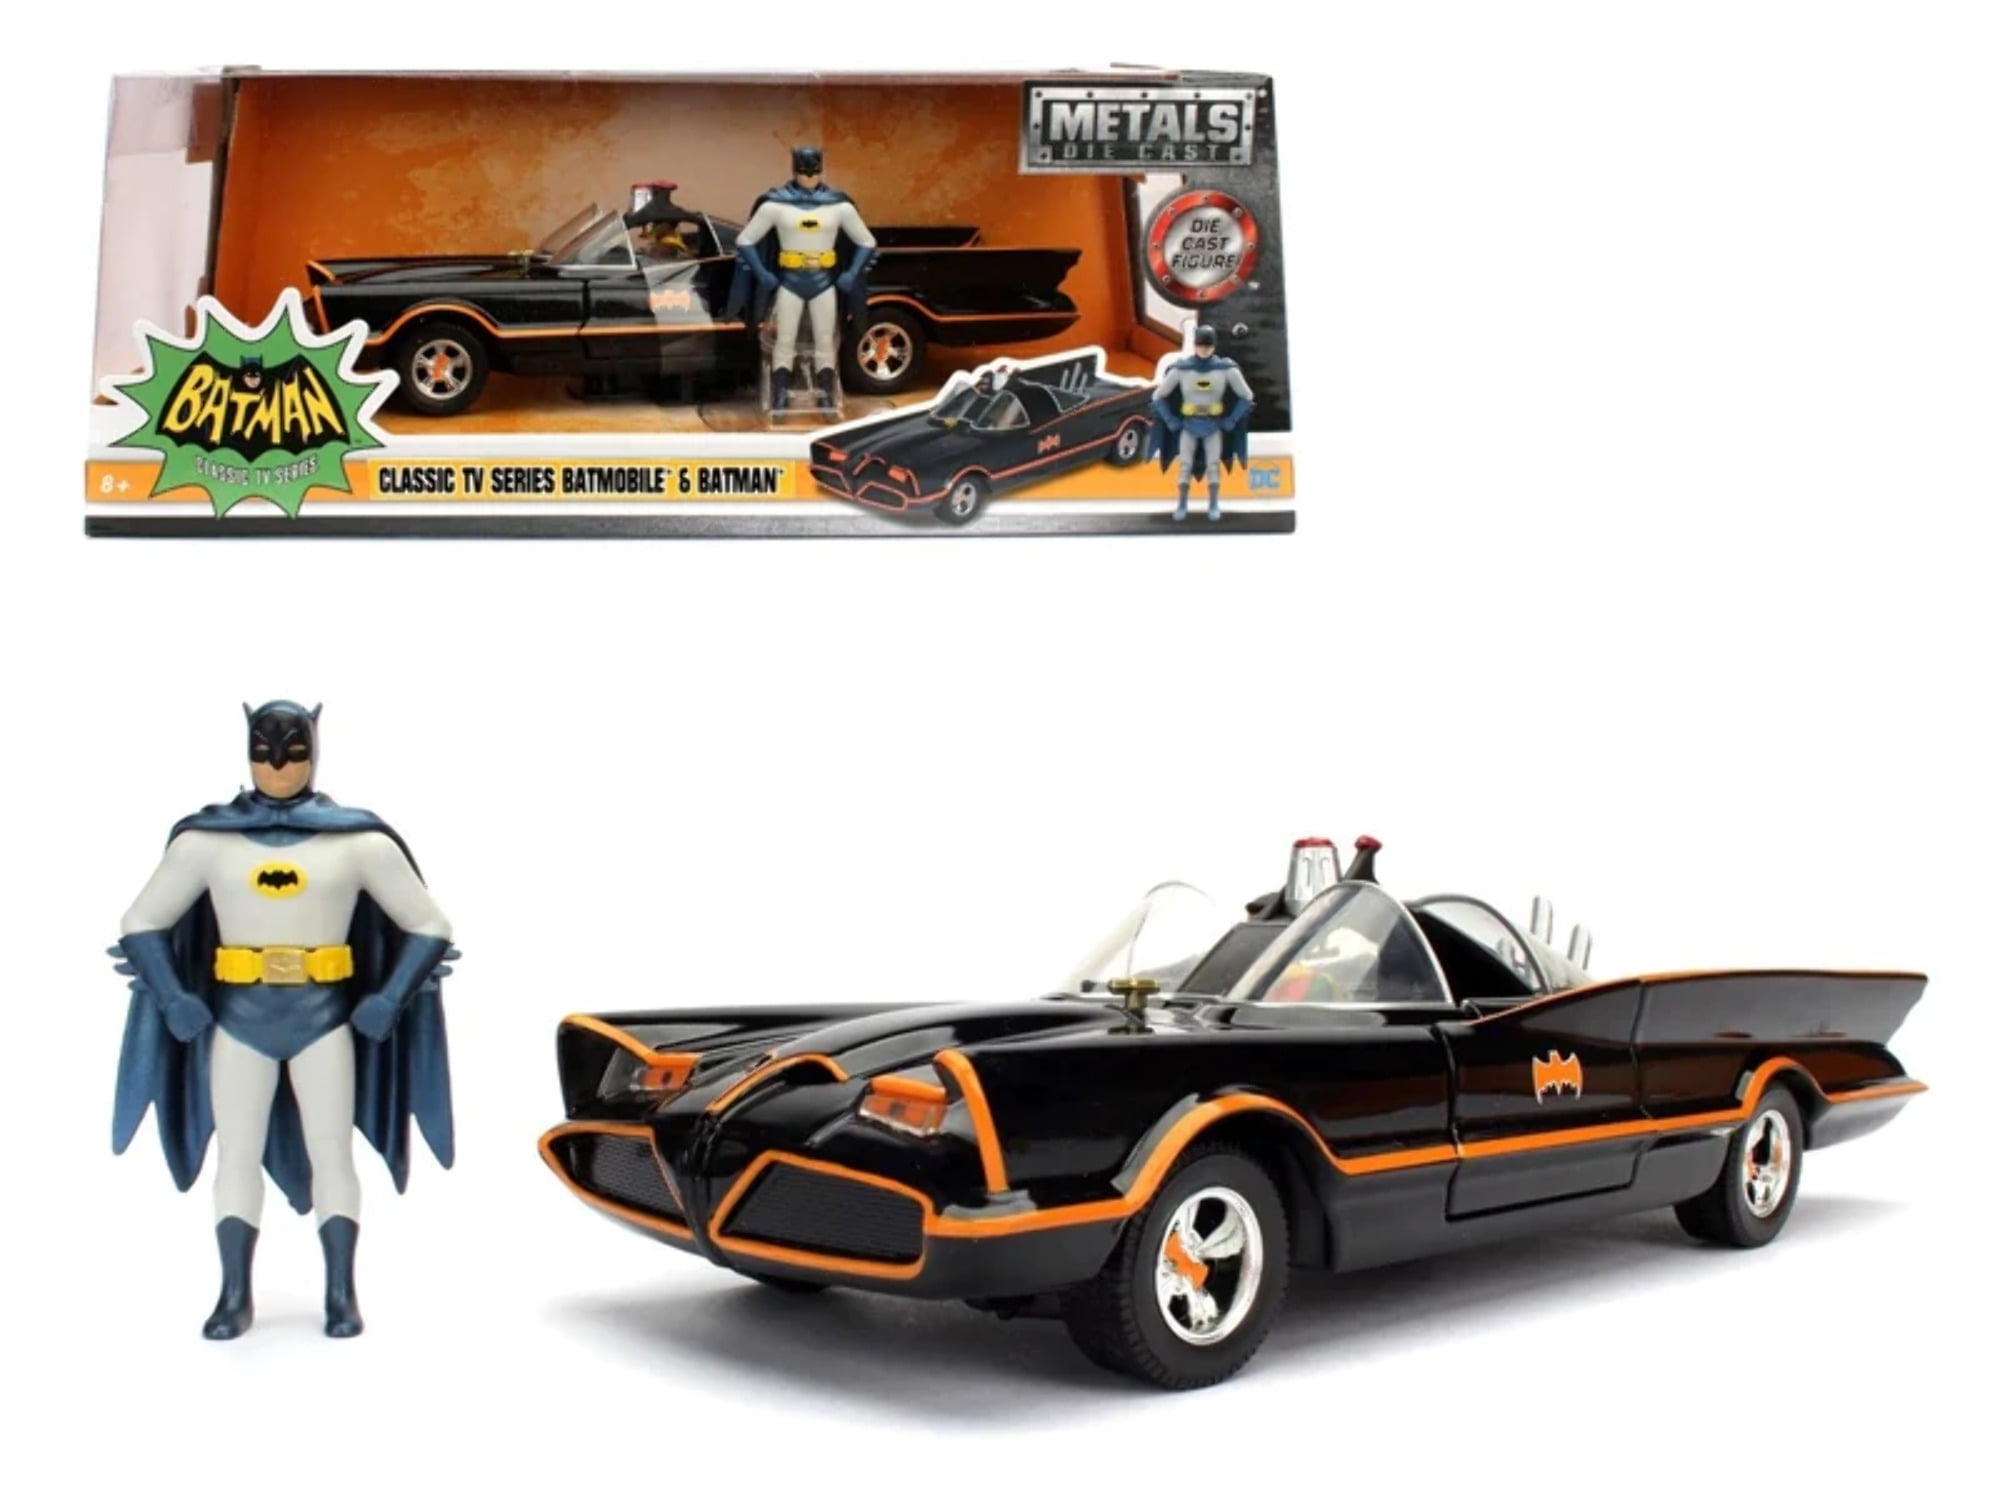 Jada 98259 1 By 24 Scale Diecast 1966 Classic Tv Series Batmobile With Diecast Batman & Plastic Robin In The Car Model Car